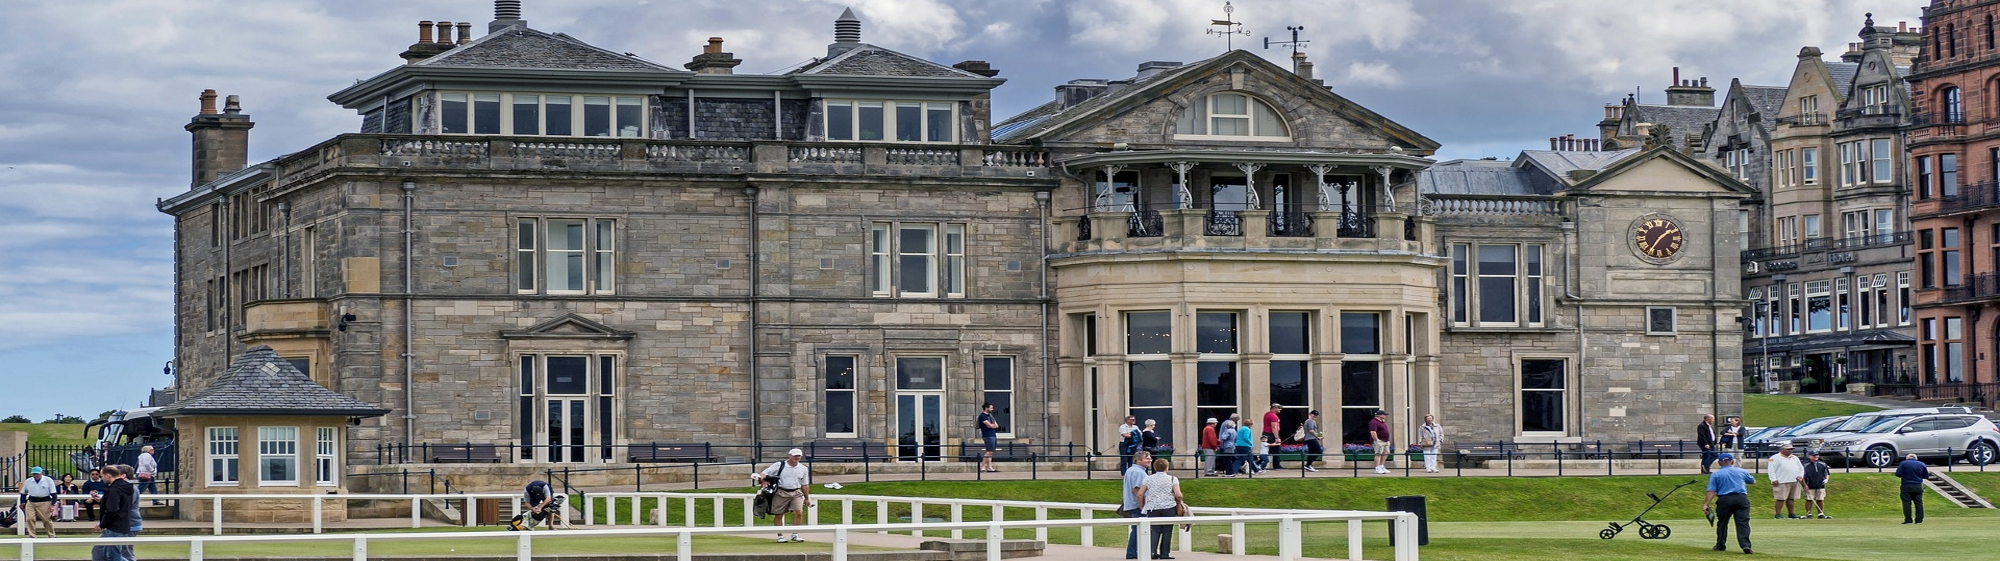 2018 Scotland Golf Tour